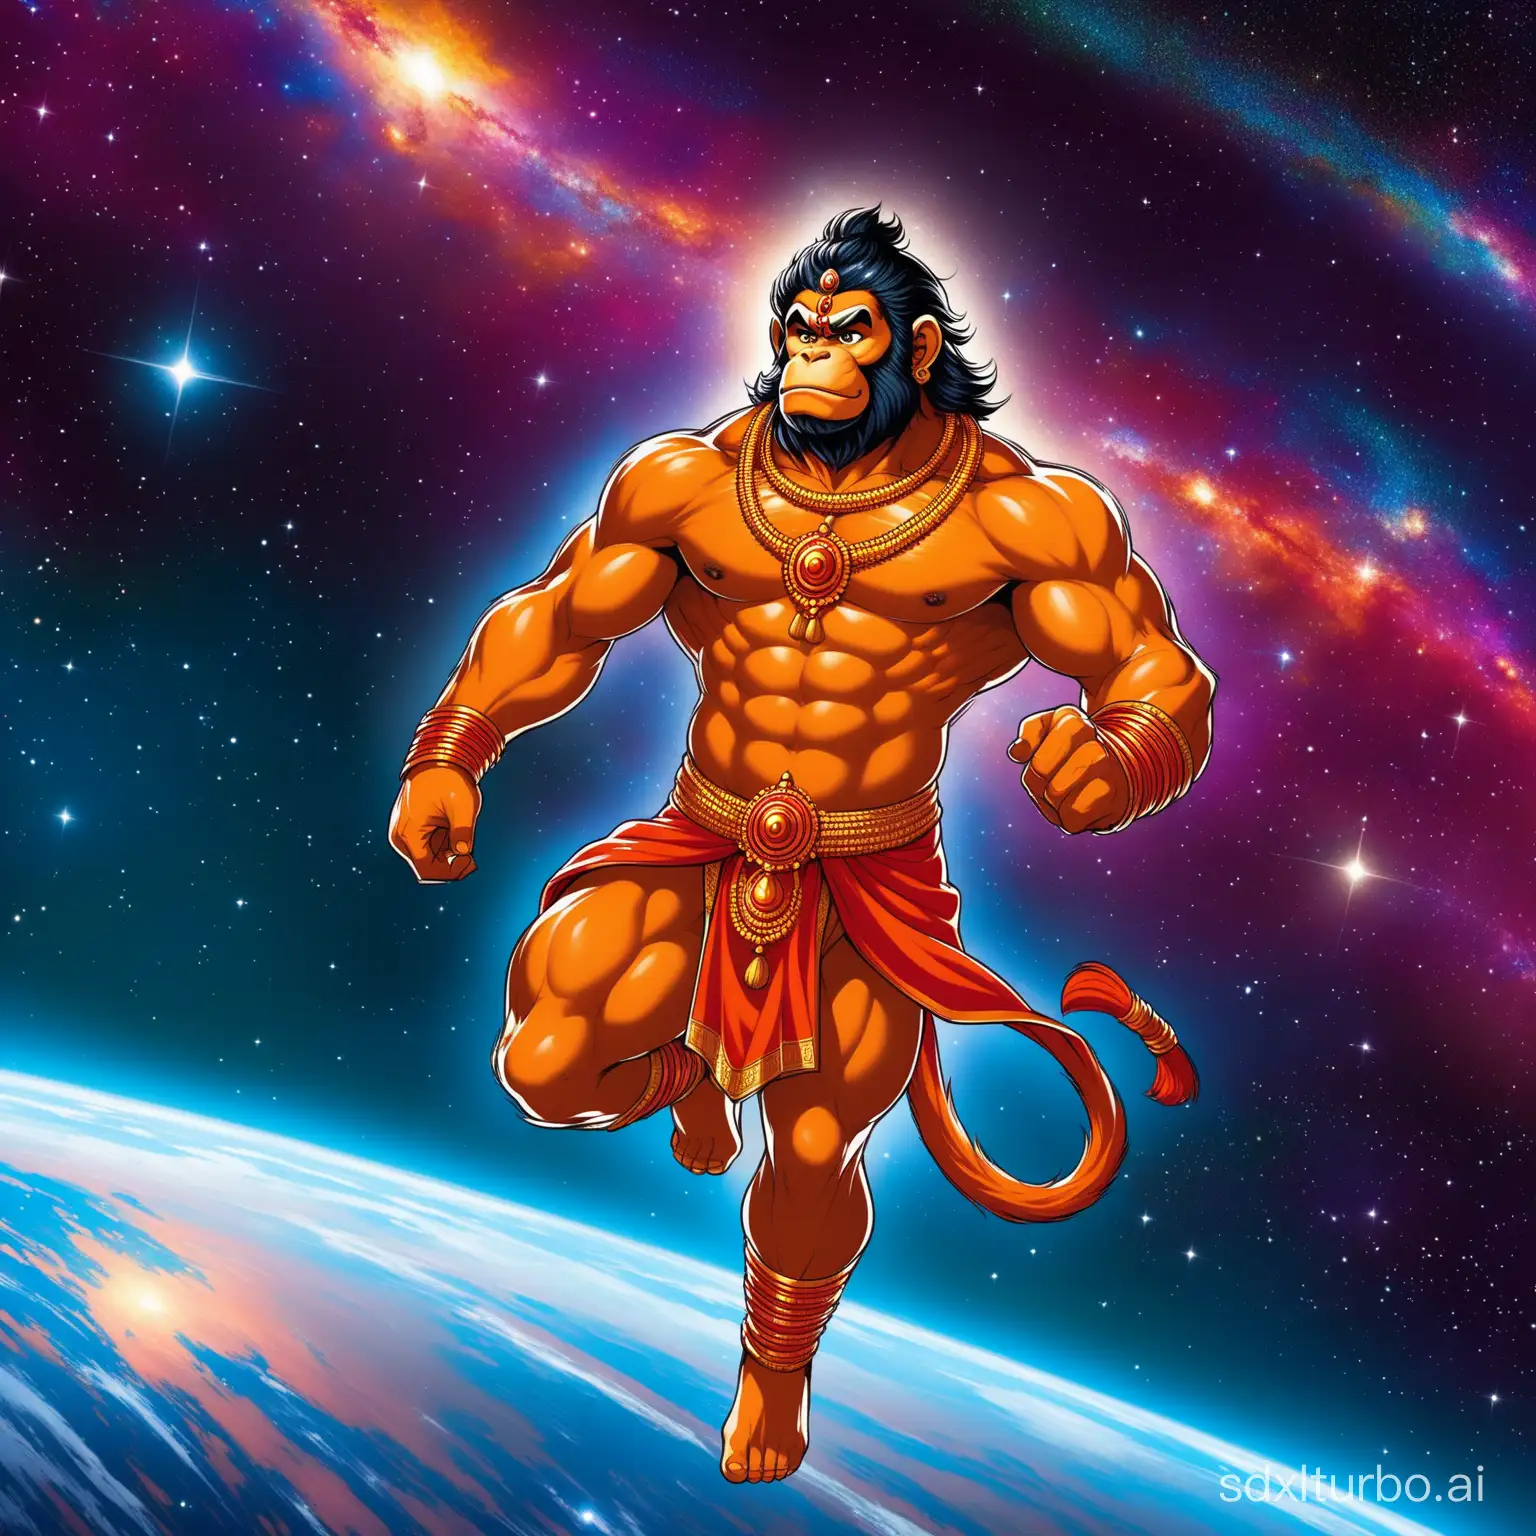 Hanuman looks like a Marvel superhero in space